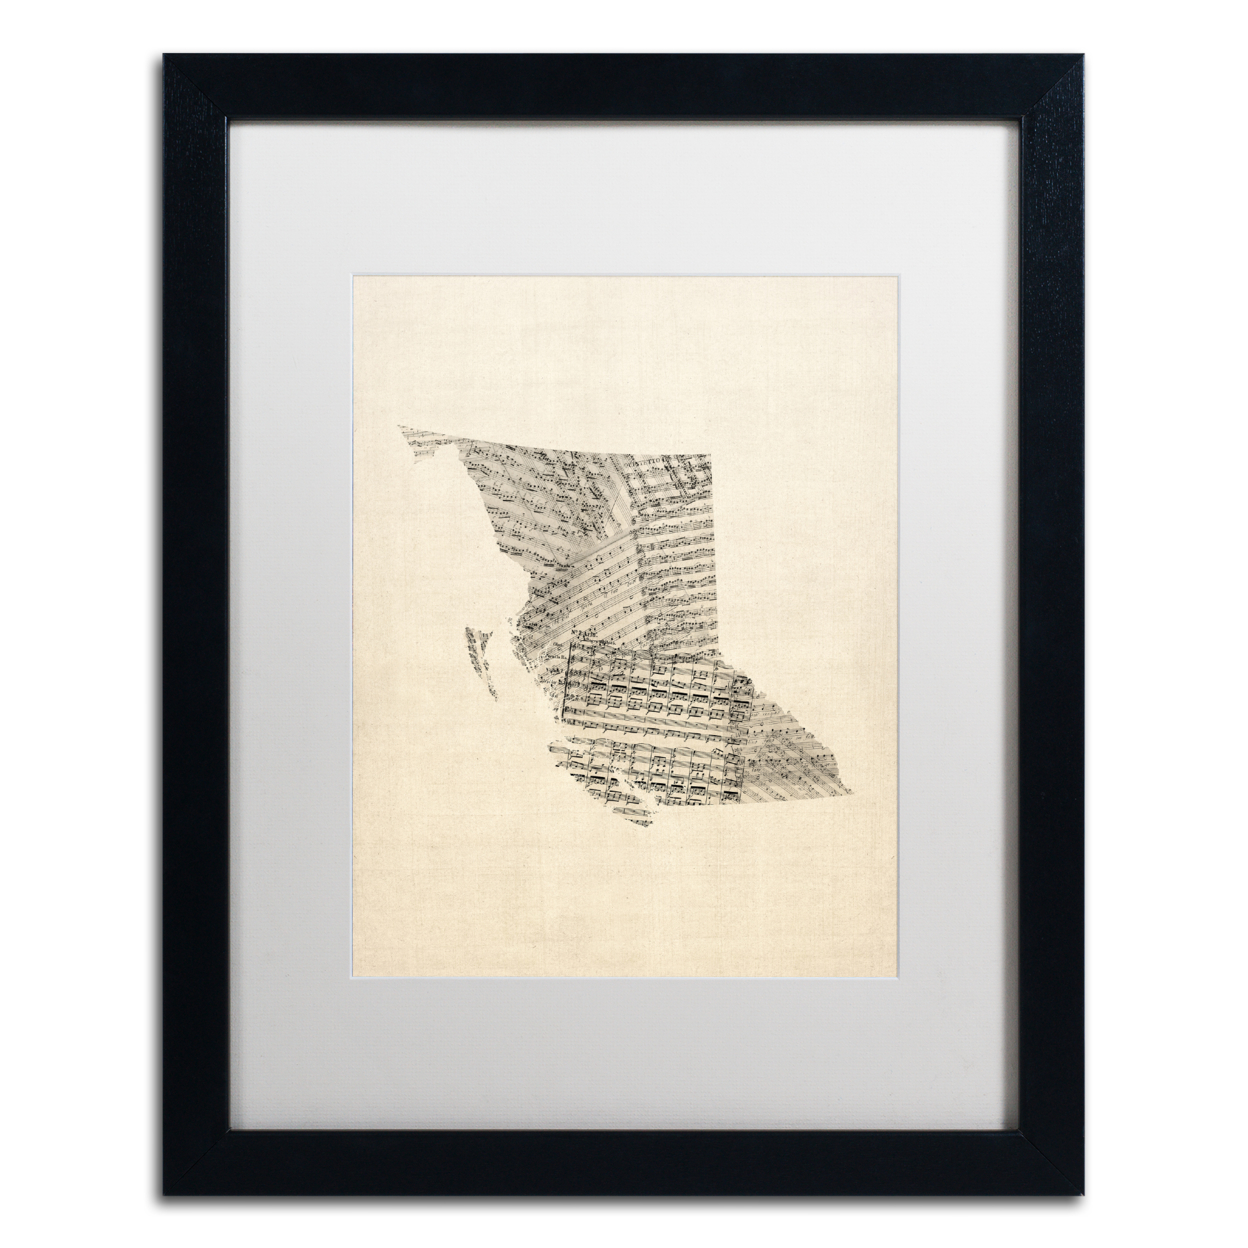 Michael Tompsett 'Sheet Music Map British Columbia' Black Wooden Framed Art 18 X 22 Inches